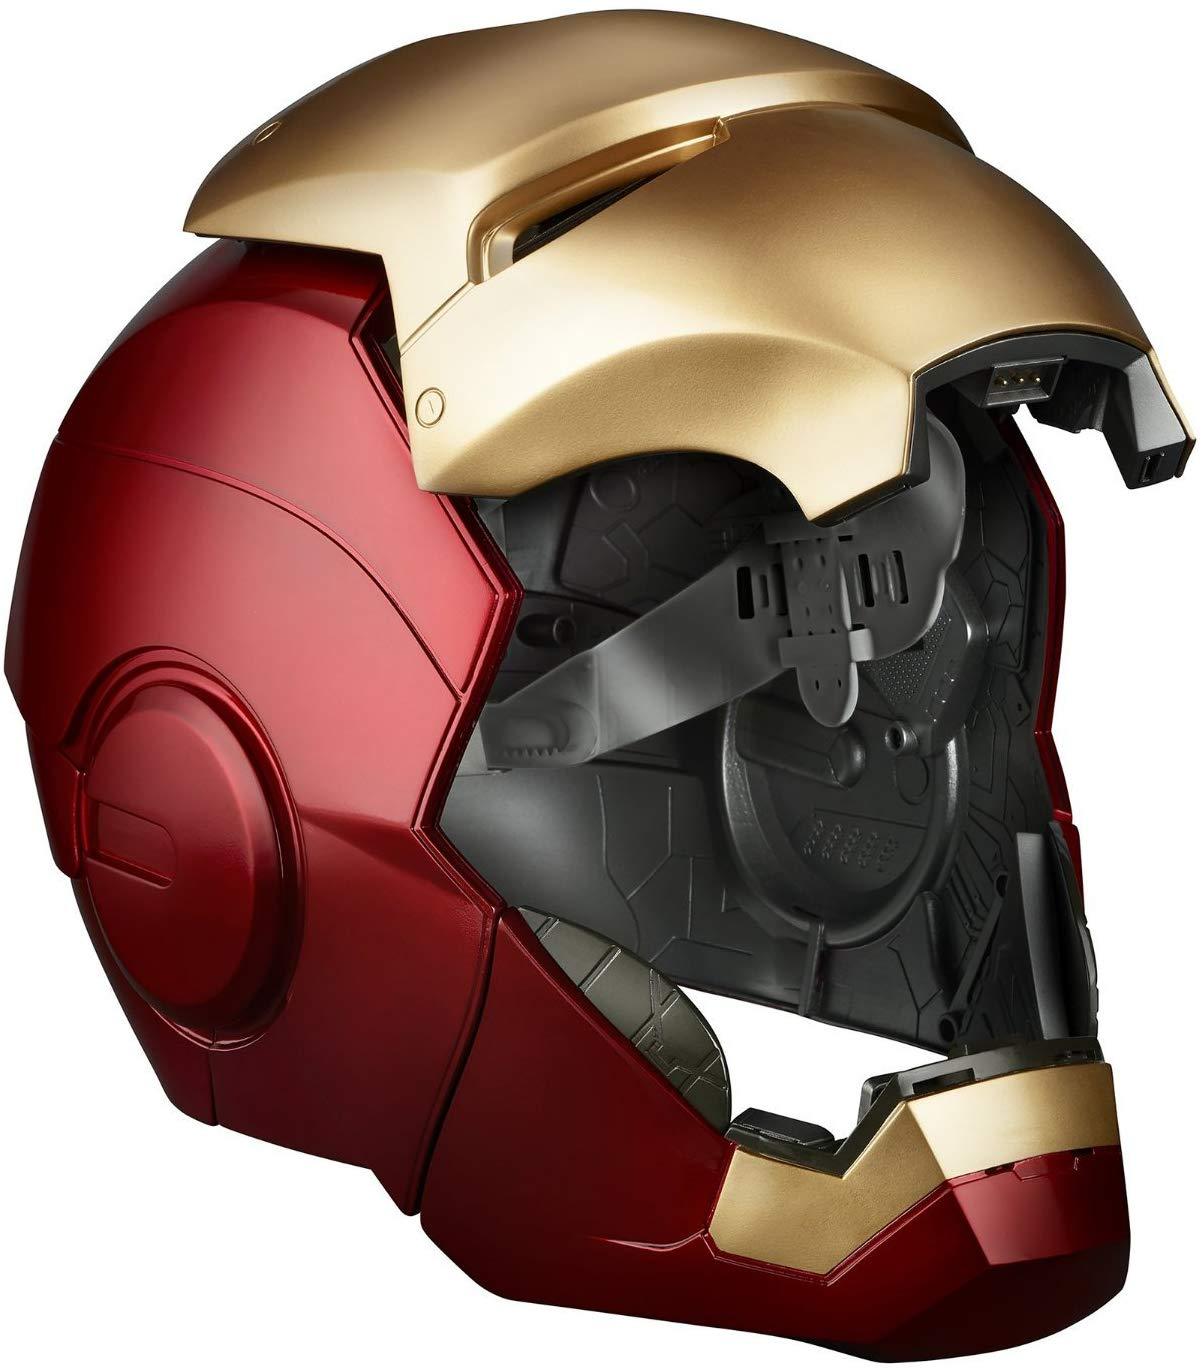 List 103+ Images pictures of iron man’s helmet Full HD, 2k, 4k